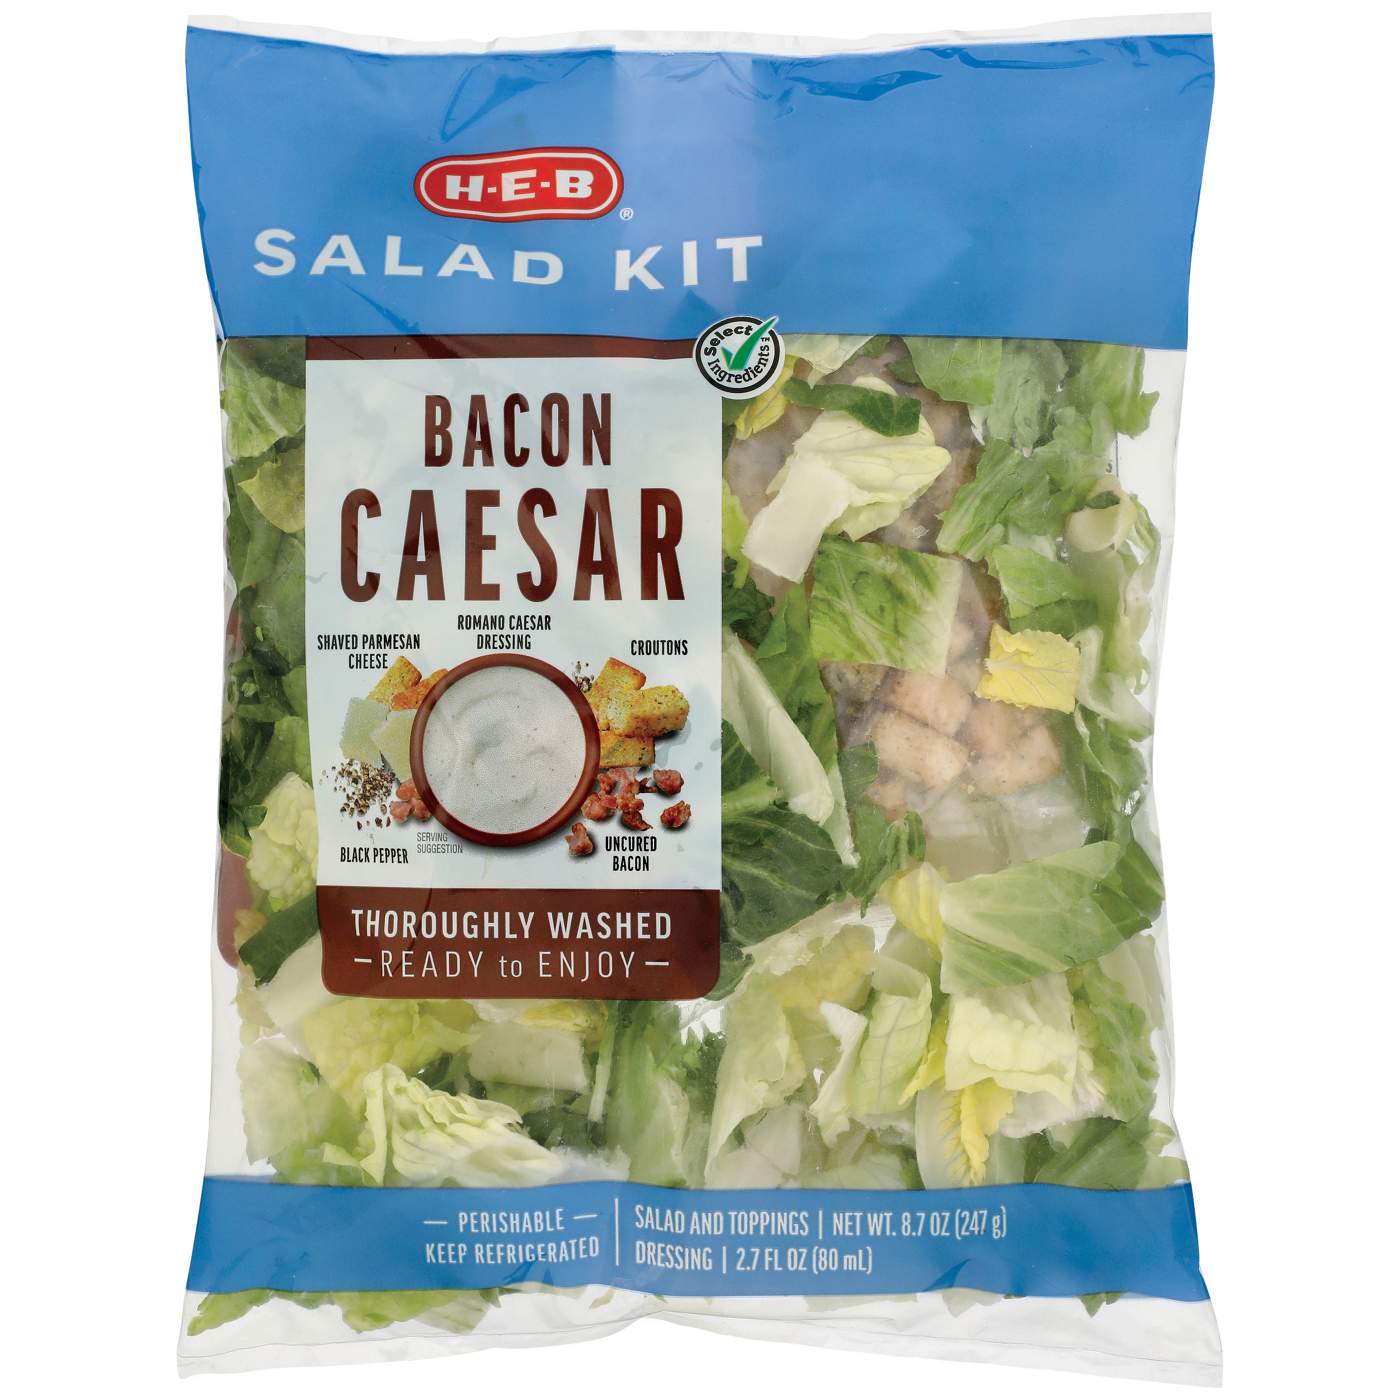 H-E-B Salad Kit - Bacon Caesar; image 1 of 4